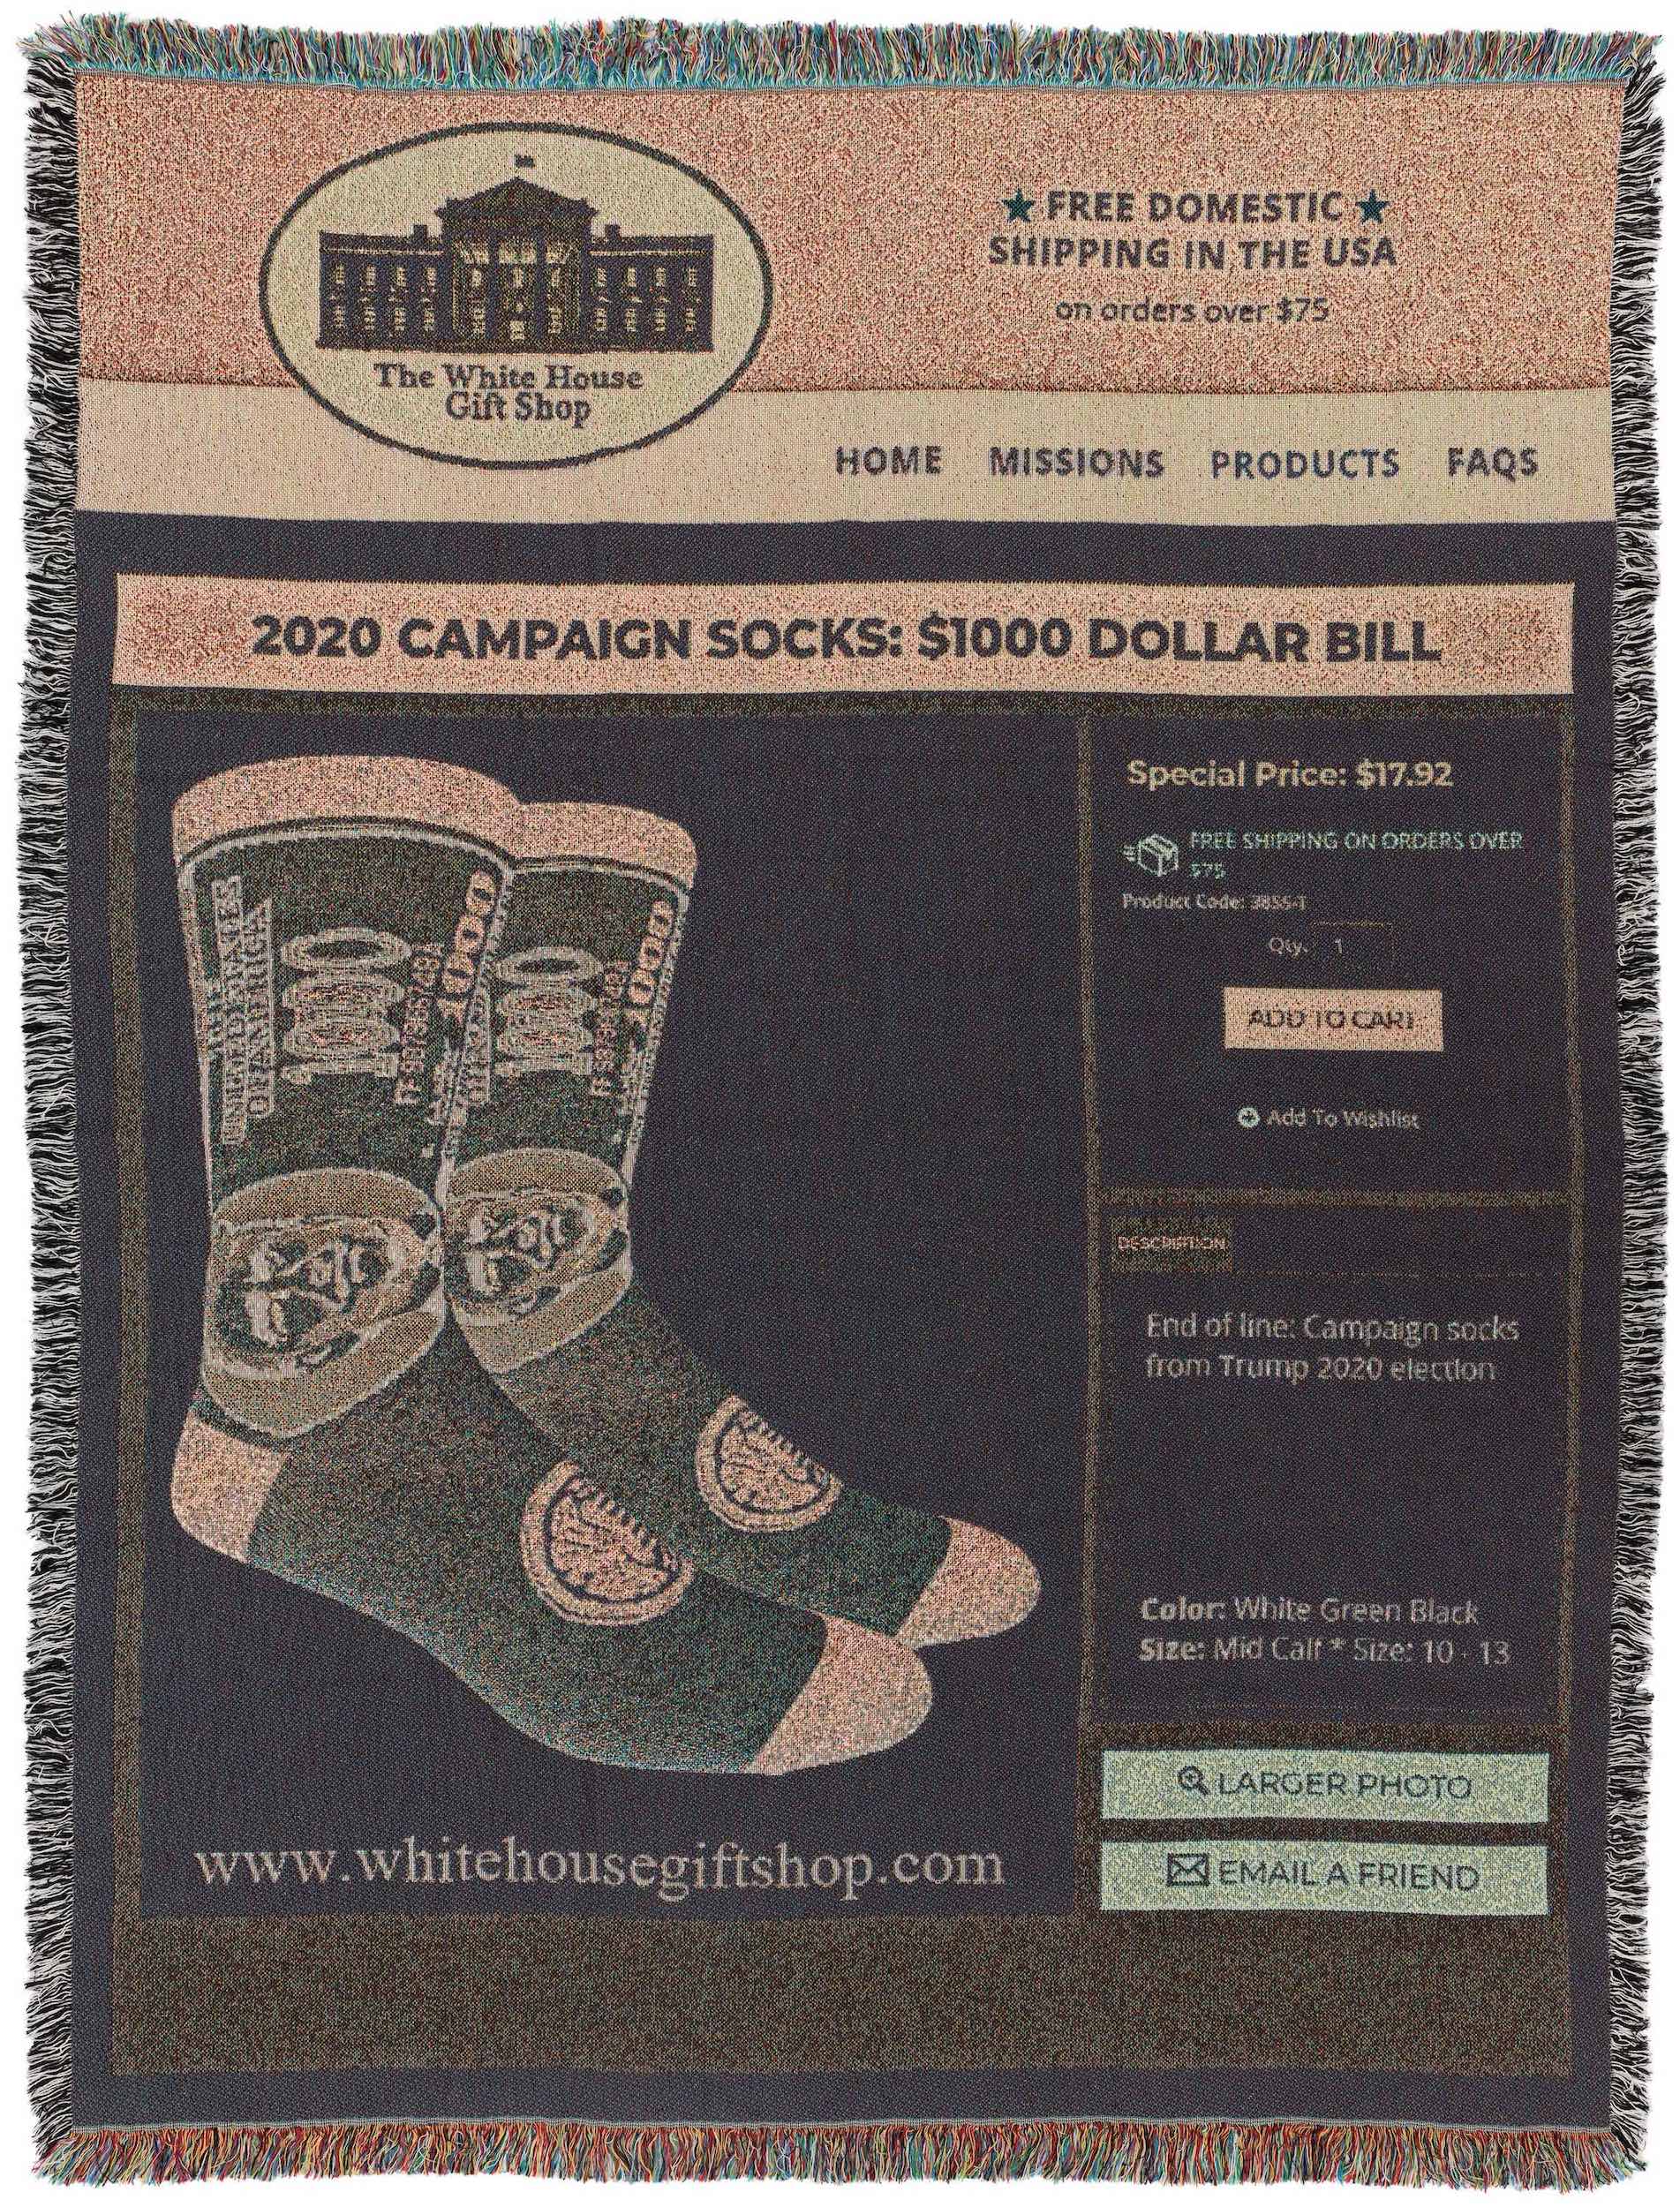 WHGS
Simon Denny WHGS Meta Throw Blanket – Socks 2021
png, Non-fungible token ERC-721 custom jacquard-woven throw blanket: 200 × 150 cm
Link Voice: https://www.voice.com/creation/100000000019816